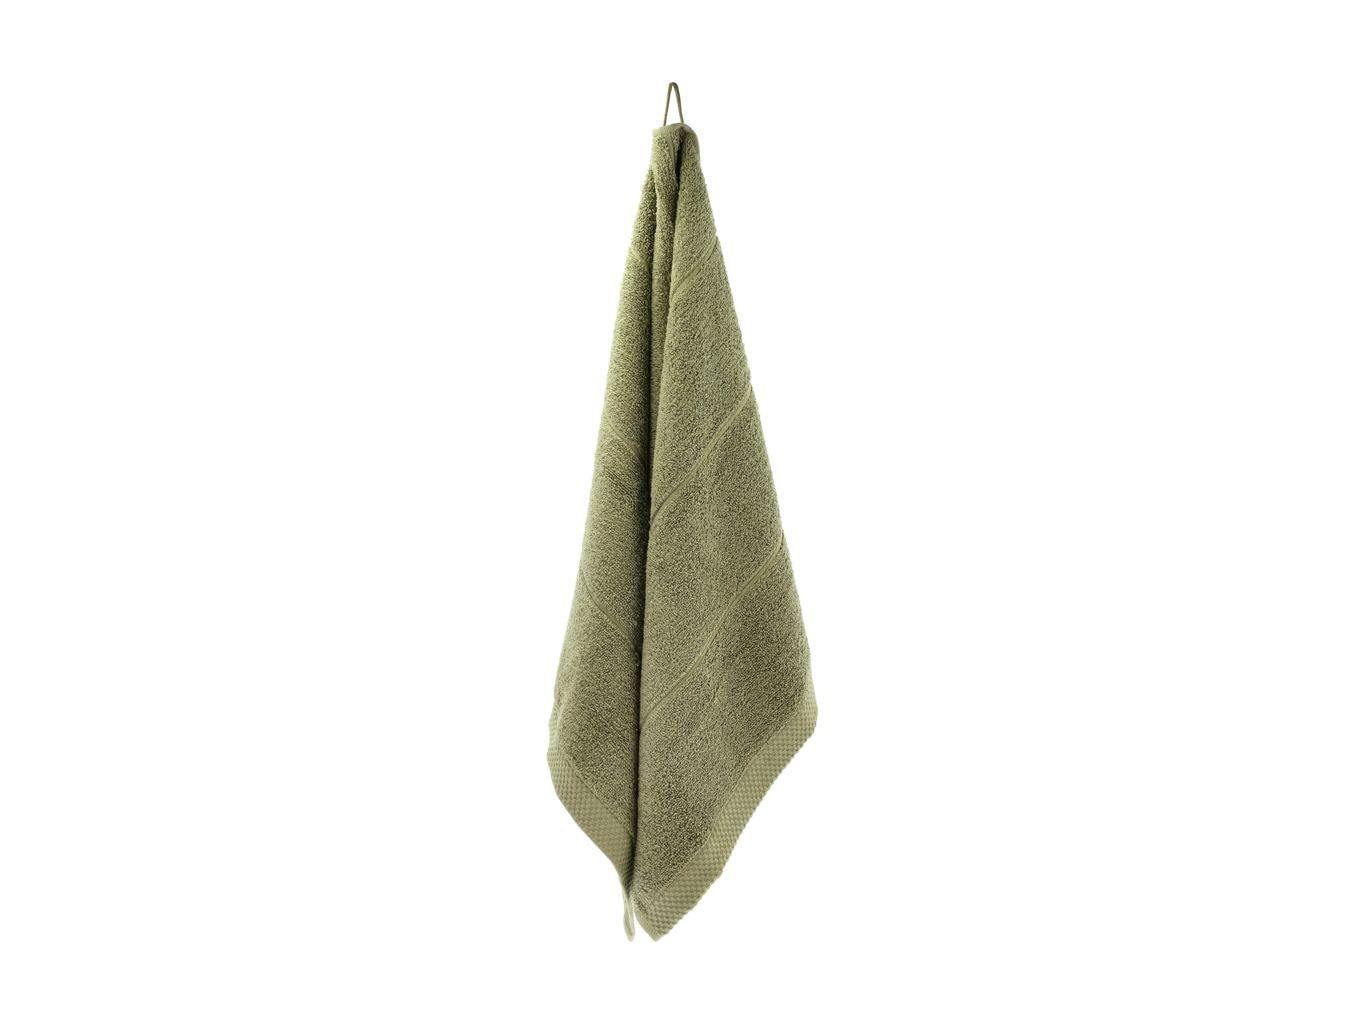 Södahl Line håndklæde 70x140, Olive